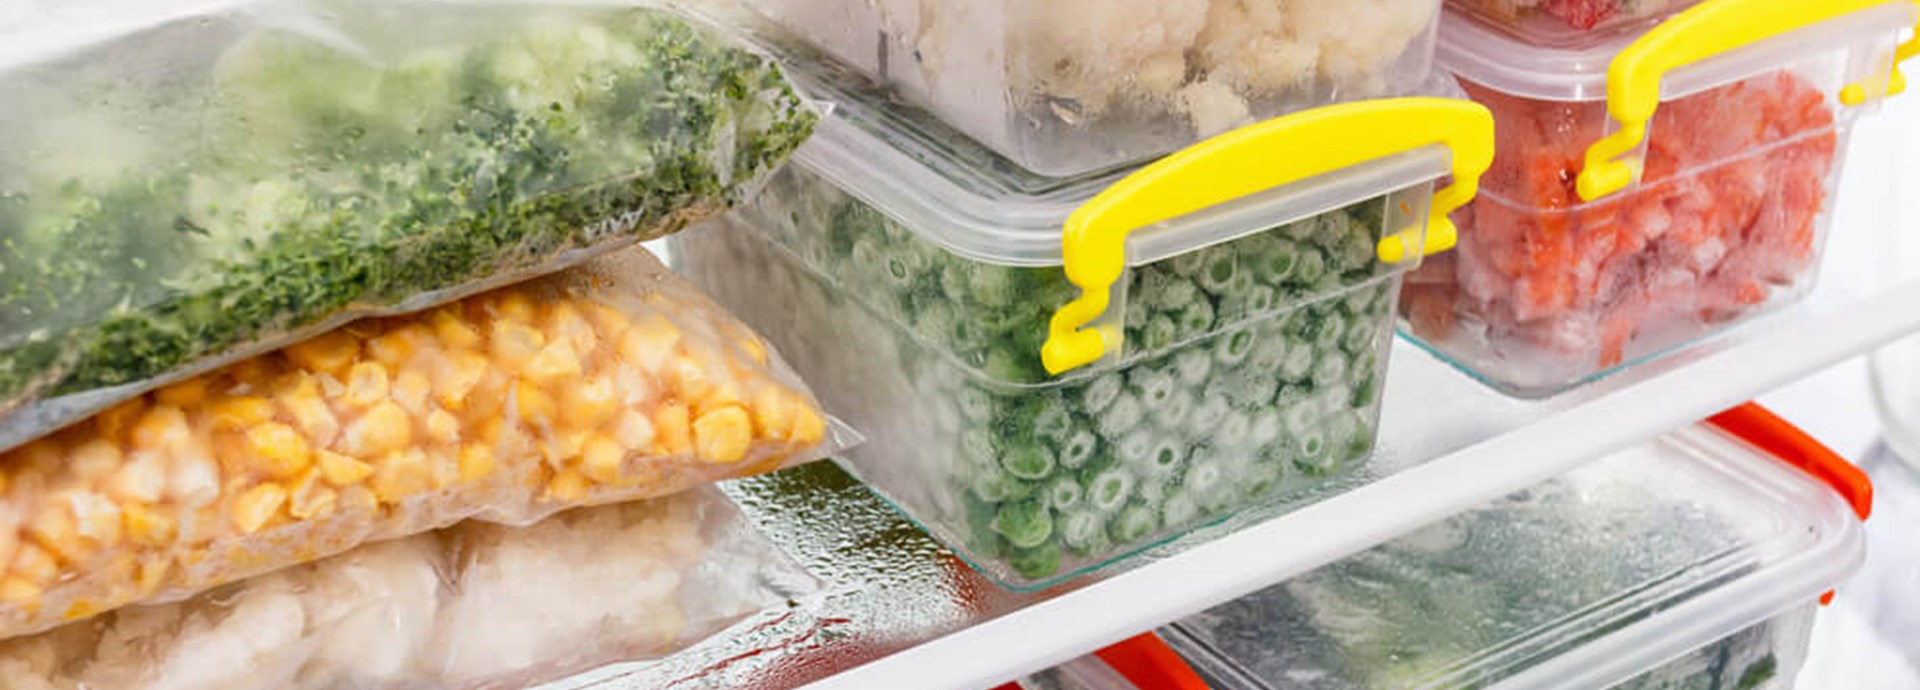 prepped food stocked in fridge